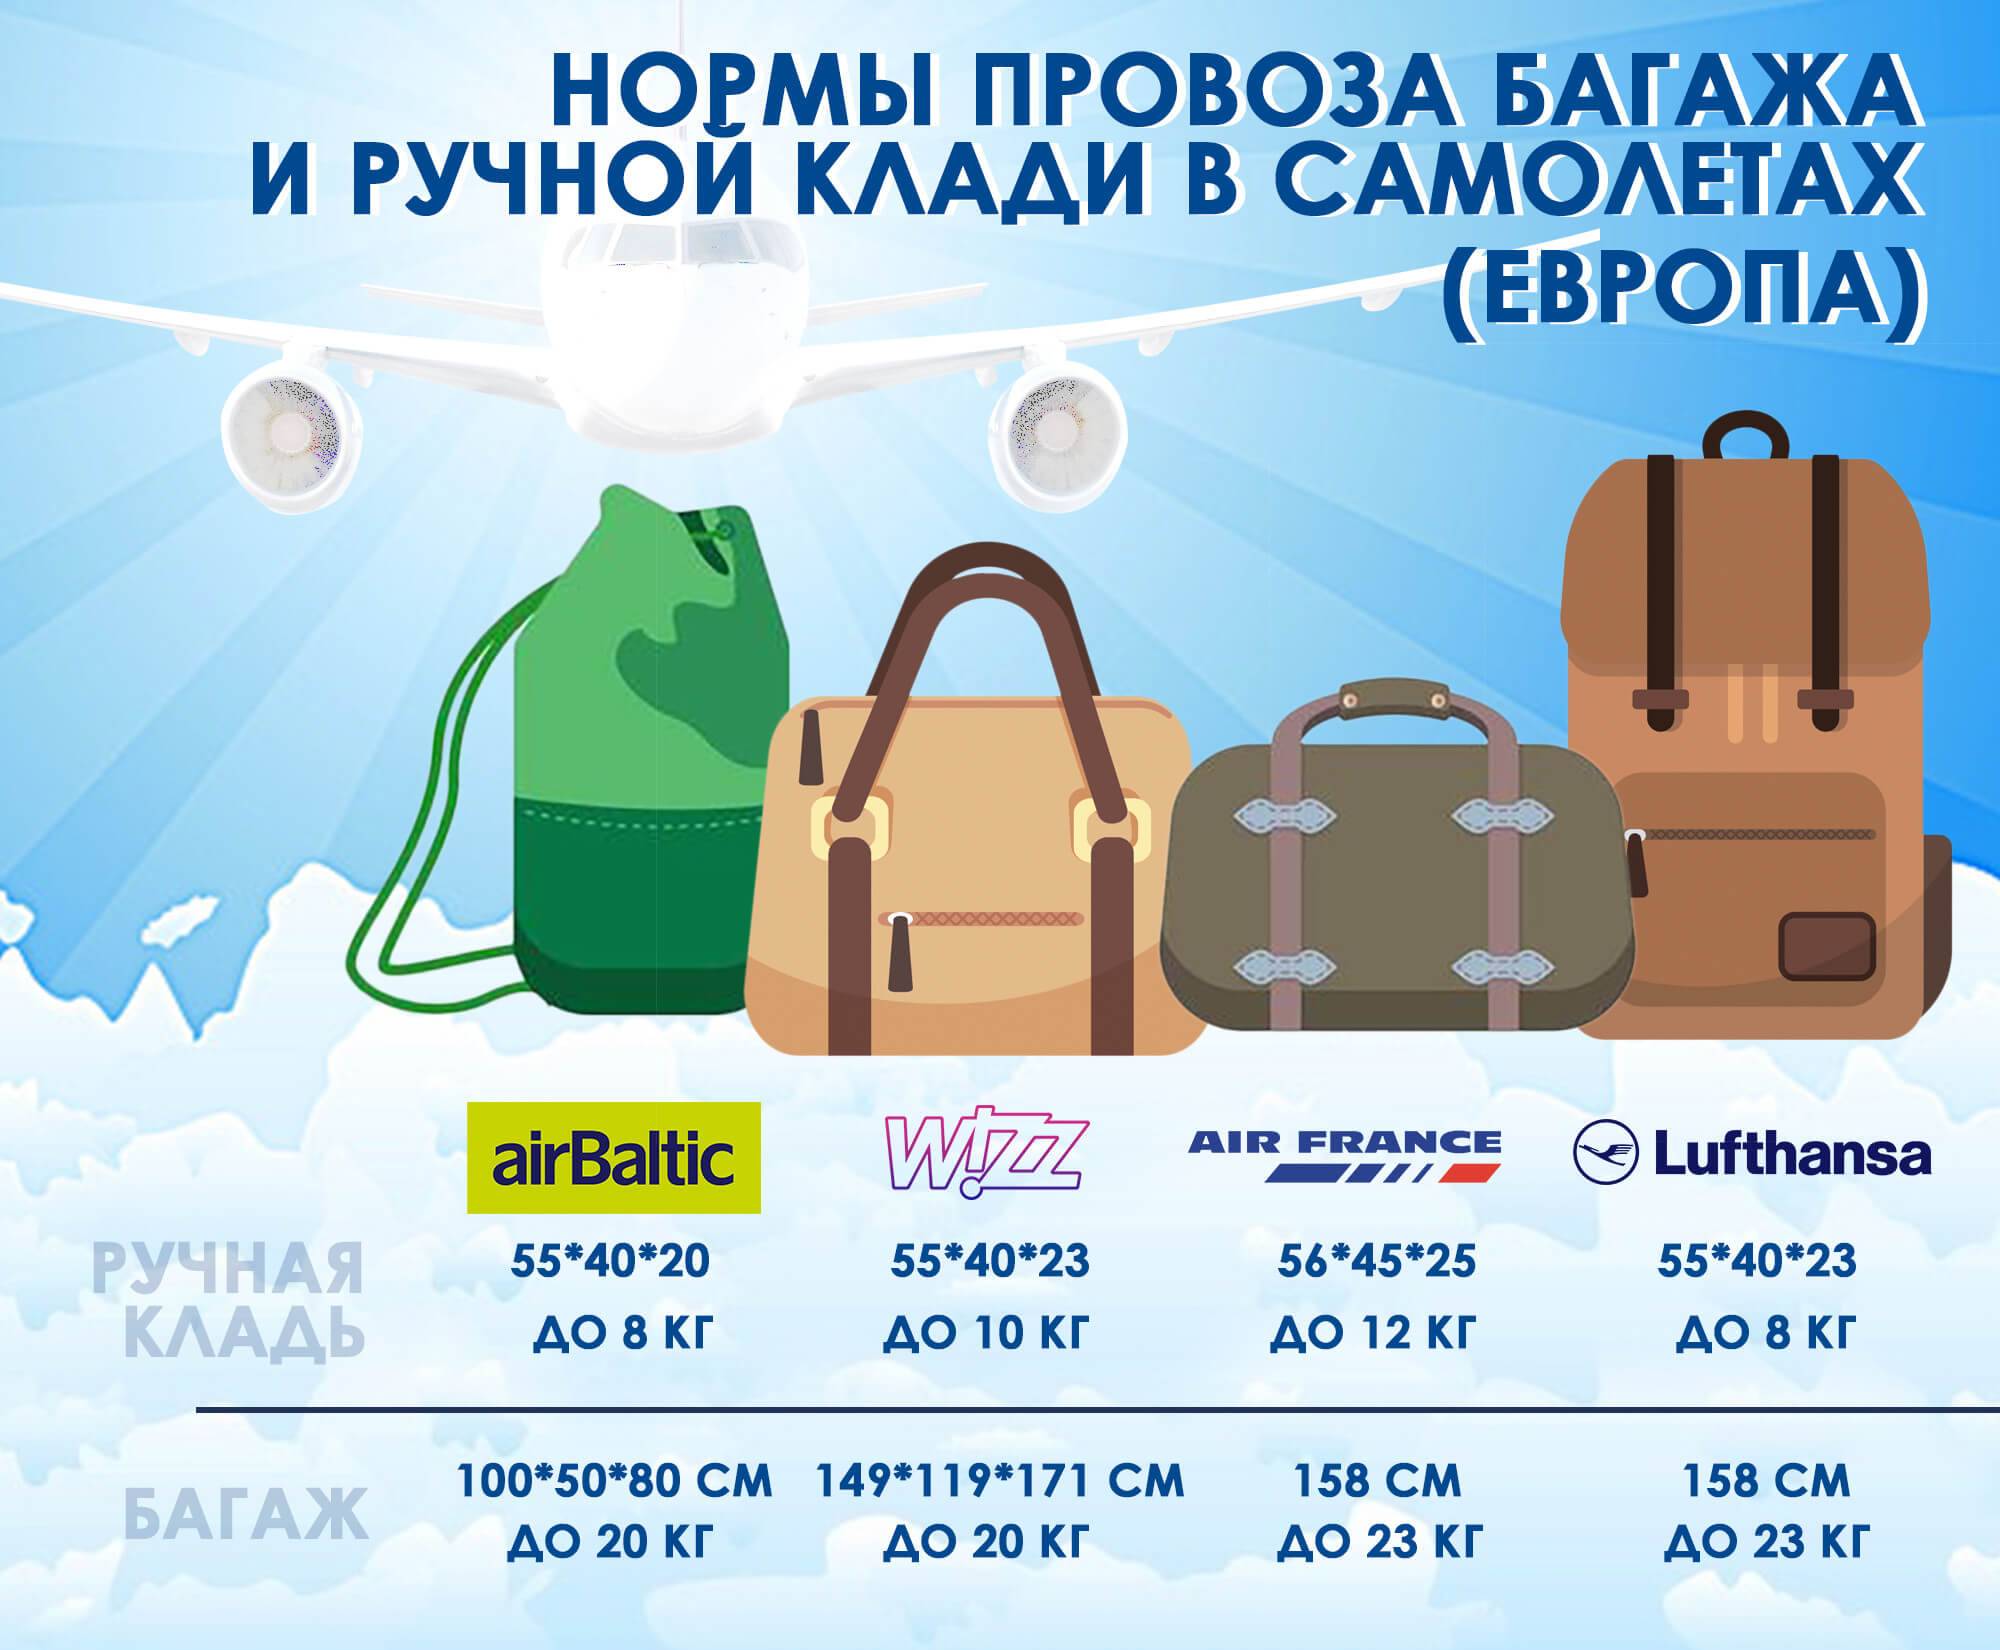 Правила провоза багажа на рейсах air malta - наш багаж